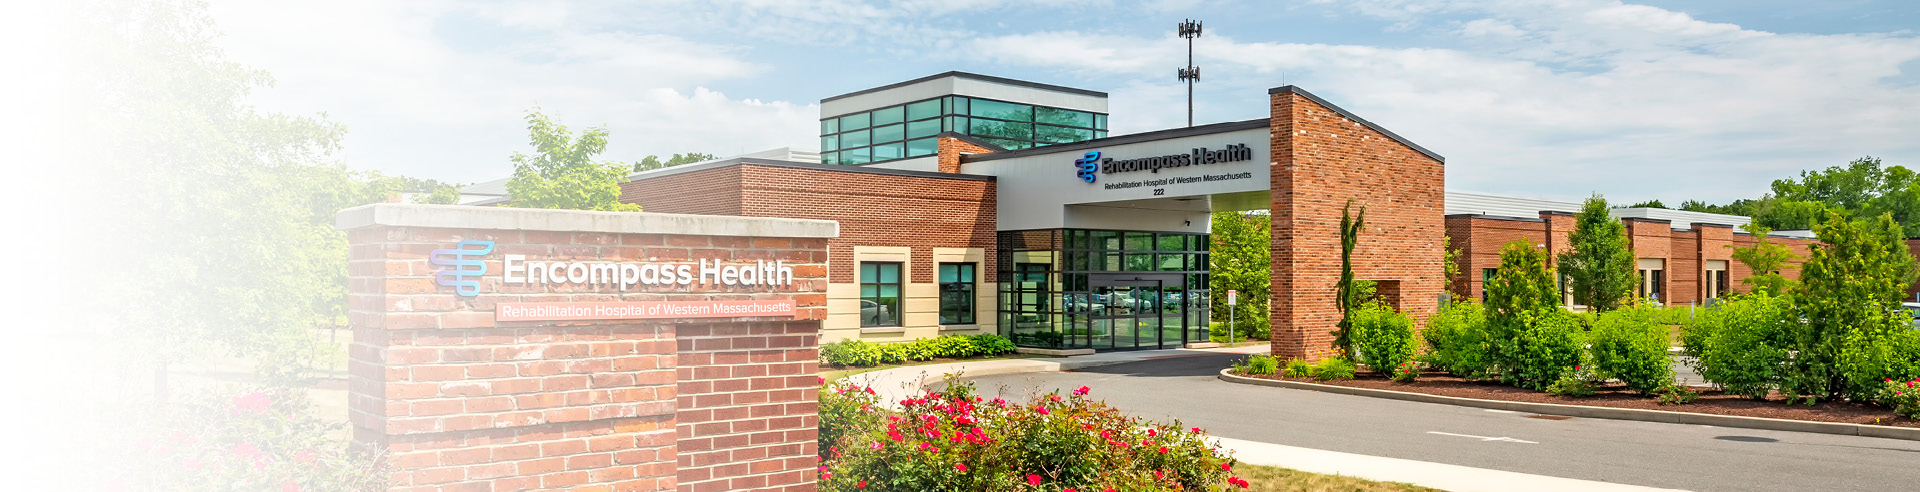 Encompass Health Rehabilitation Hospital of Western Massachusetts exterior